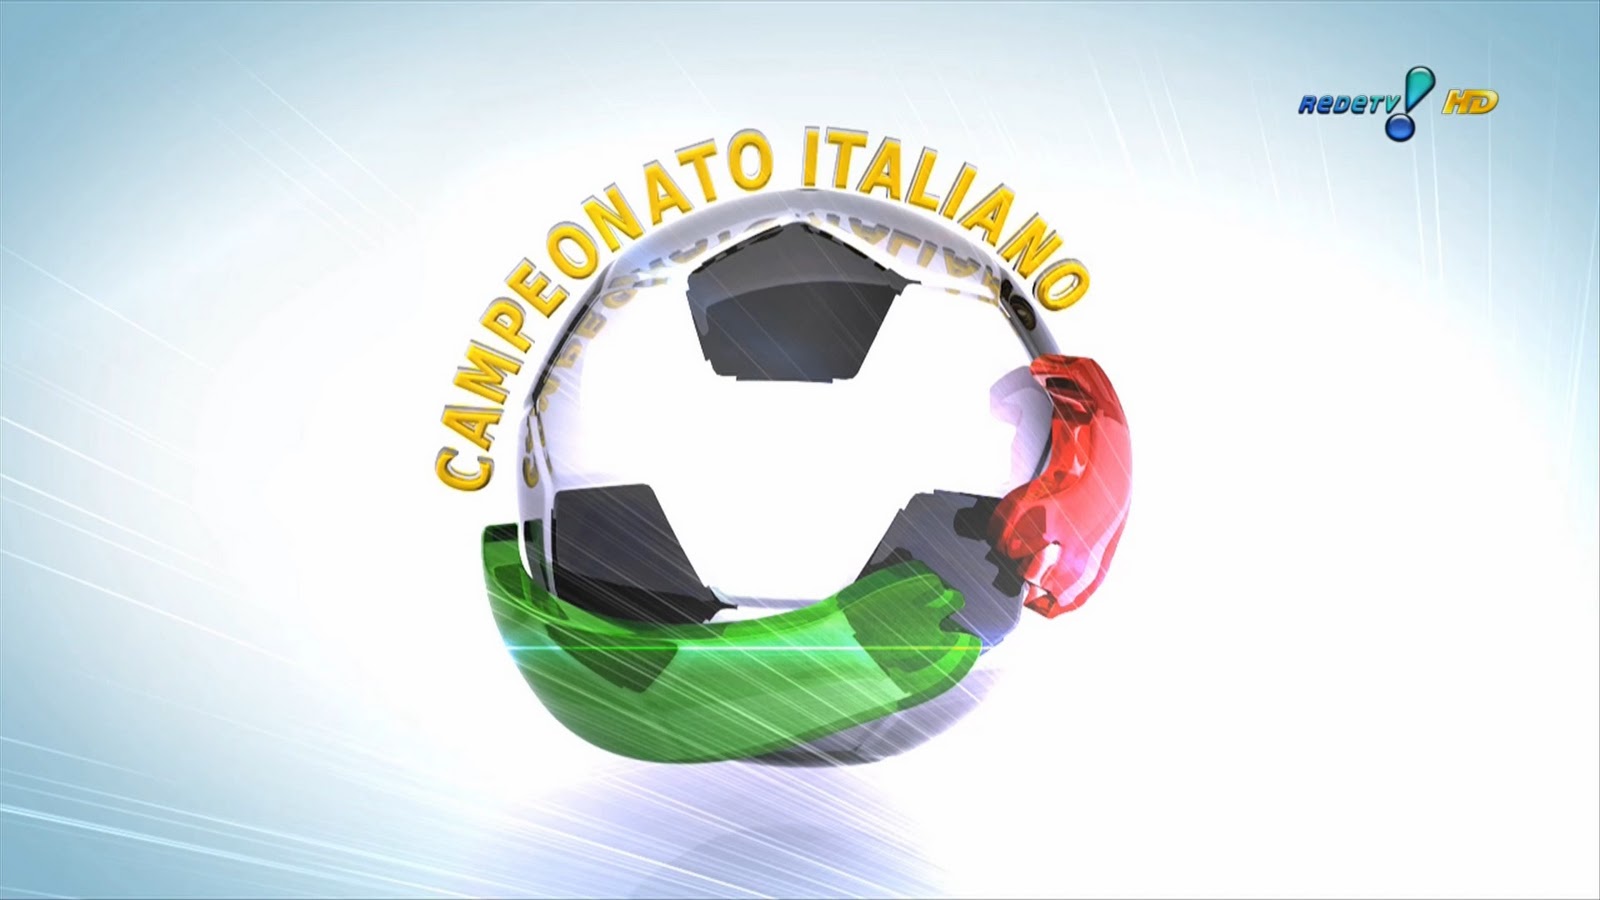 Campeonato Italiano sera transmitido pela Rede TV